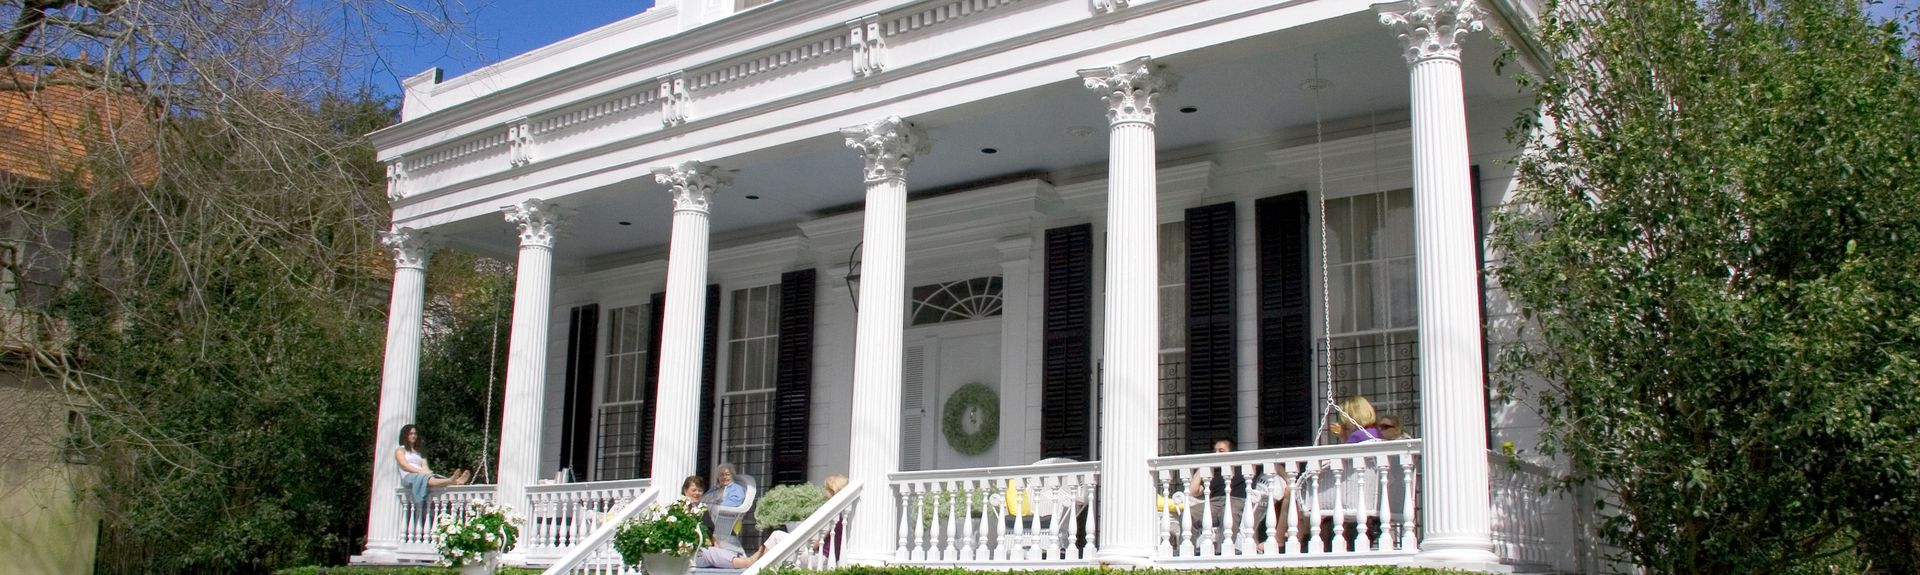 Top 20 Best Garden District New Orleans Vacation Rentals House